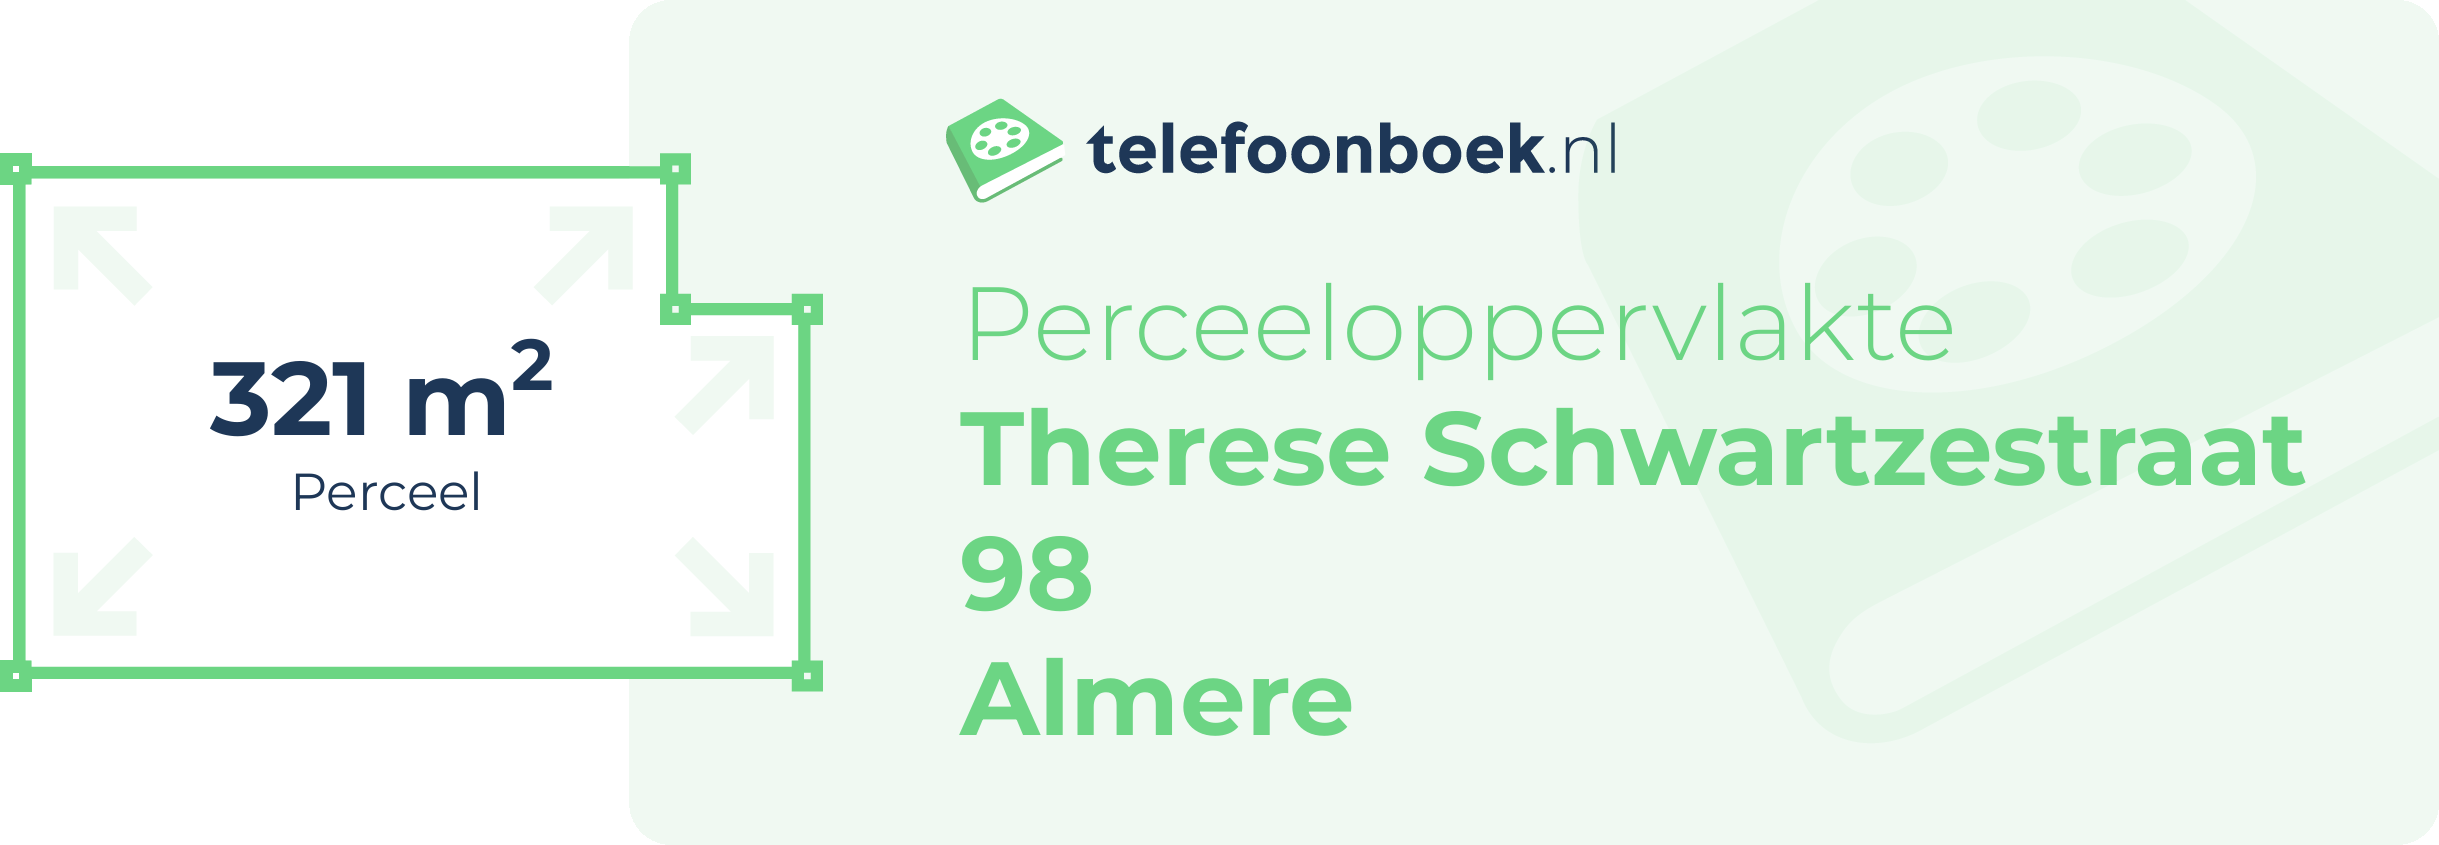 Perceeloppervlakte Therese Schwartzestraat 98 Almere